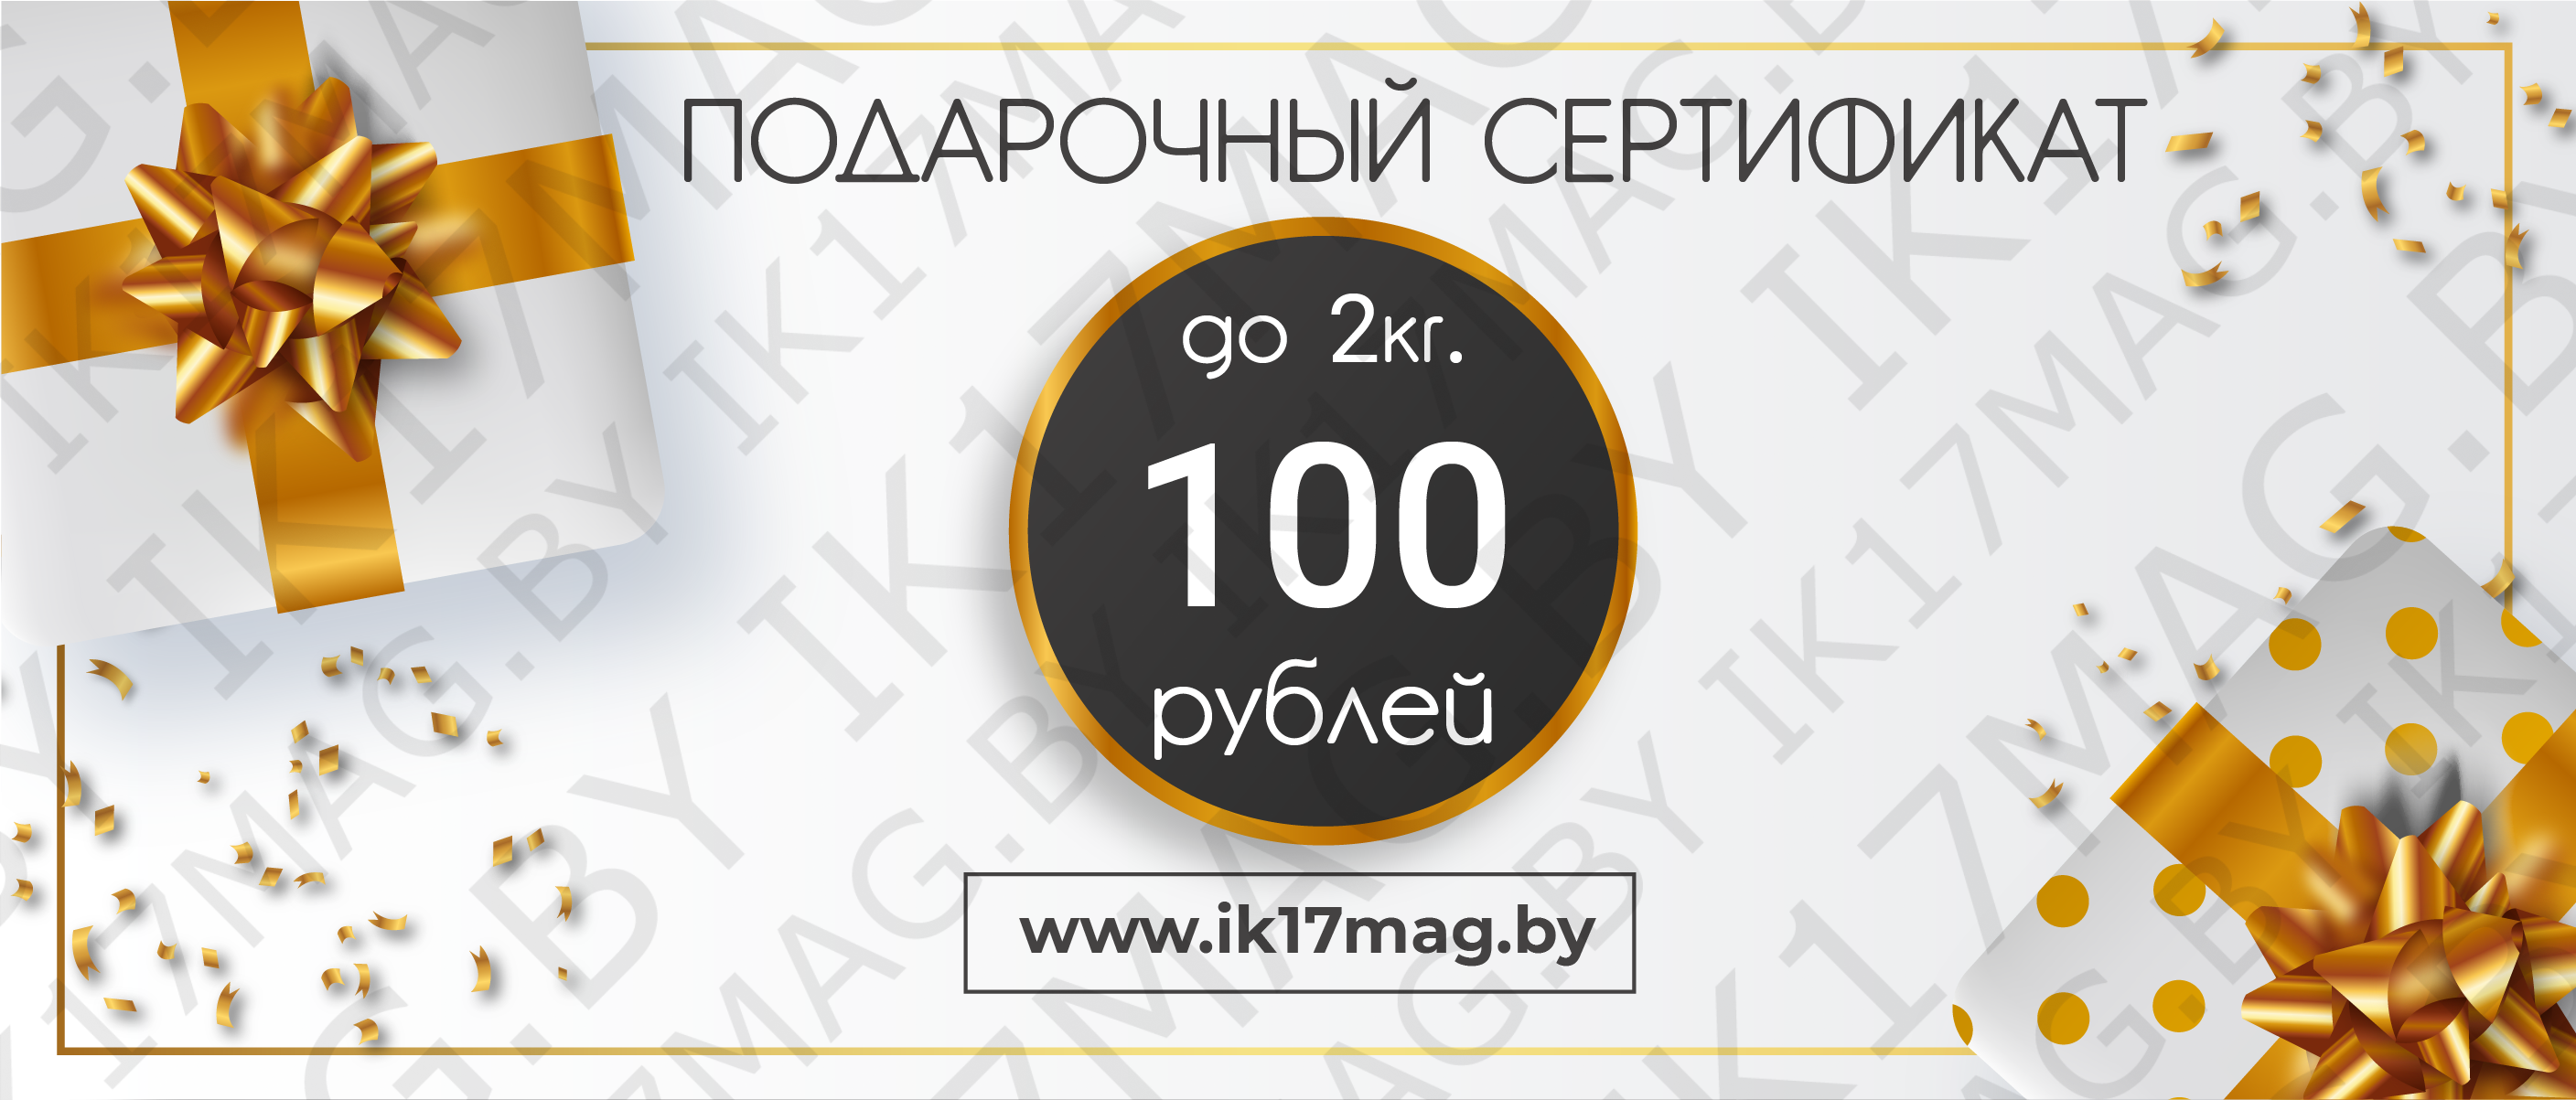 Сертификат на 100 рублей до 2 кг.